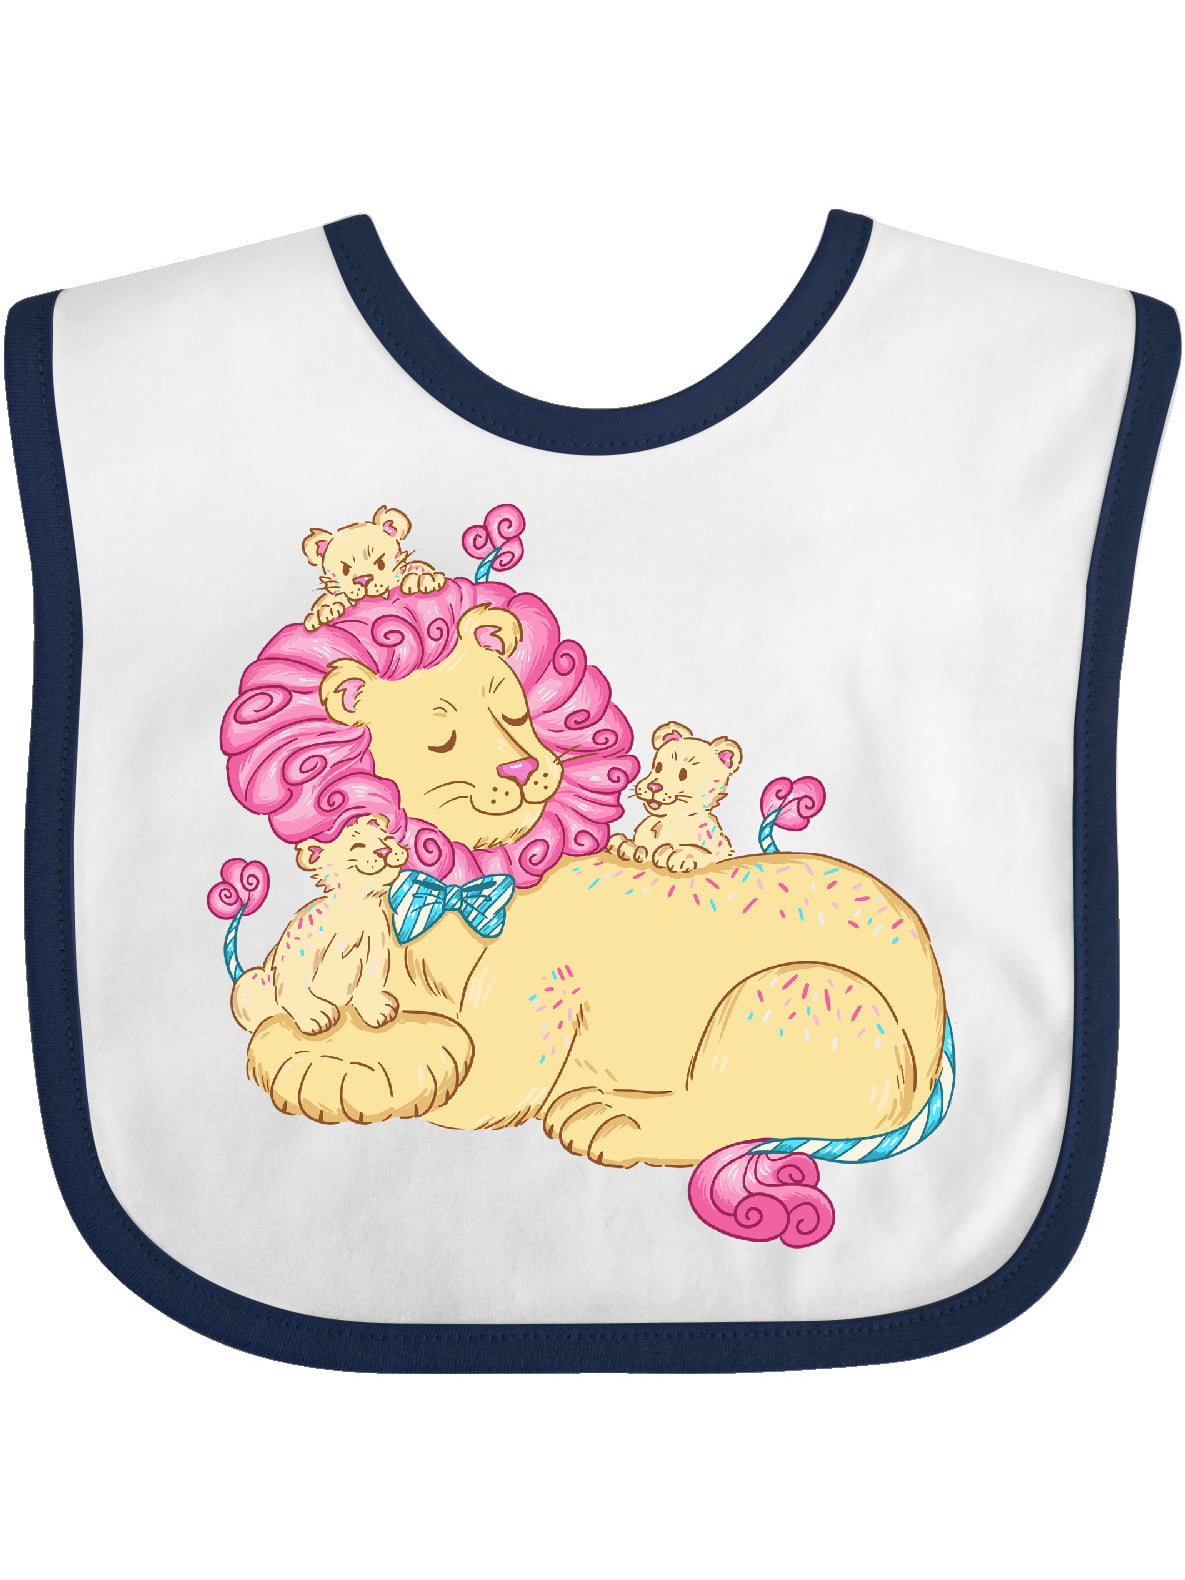 Cotton Candy Lions with Pink Mane Baby Bib - Walmart.com - Walmart.com